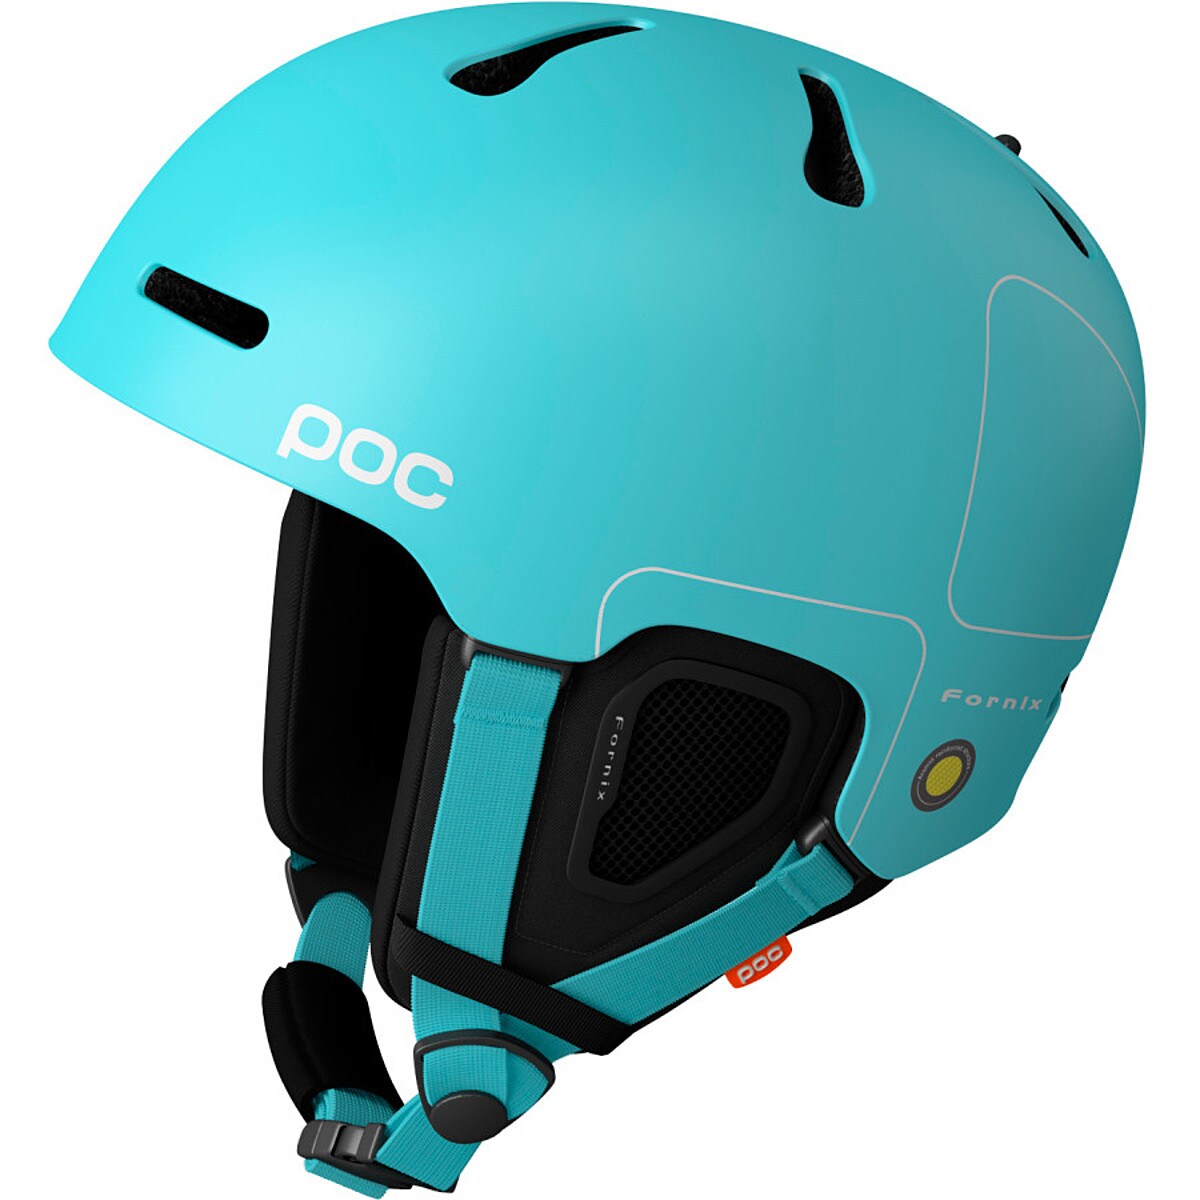 Fornix Helmet Turquoise, XL/XXL by POC | US-Parks.com